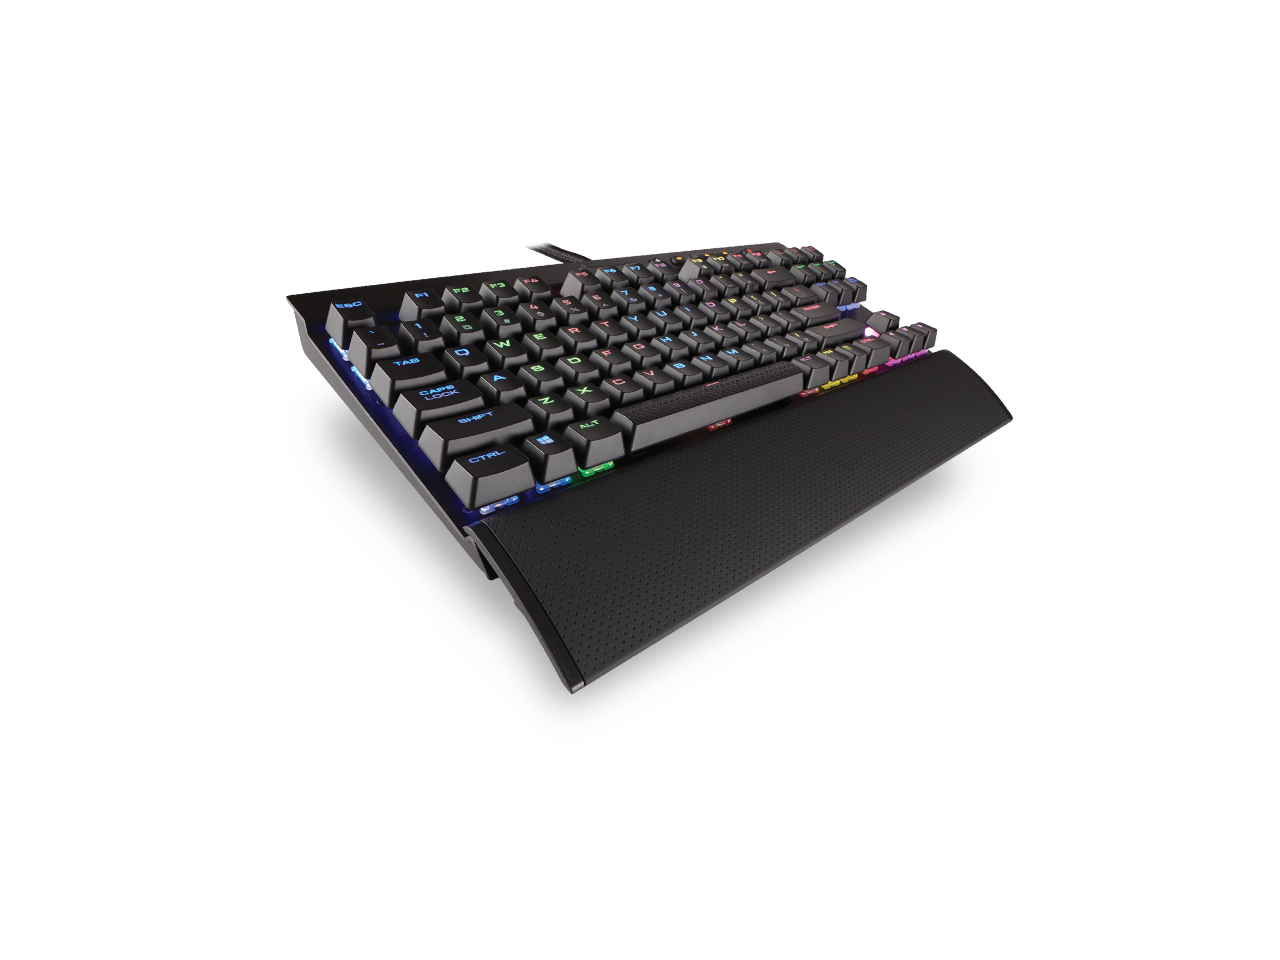 Corsair K65 LUX RGB Compact Mechanical Gaming Keyboard - Newegg.ca